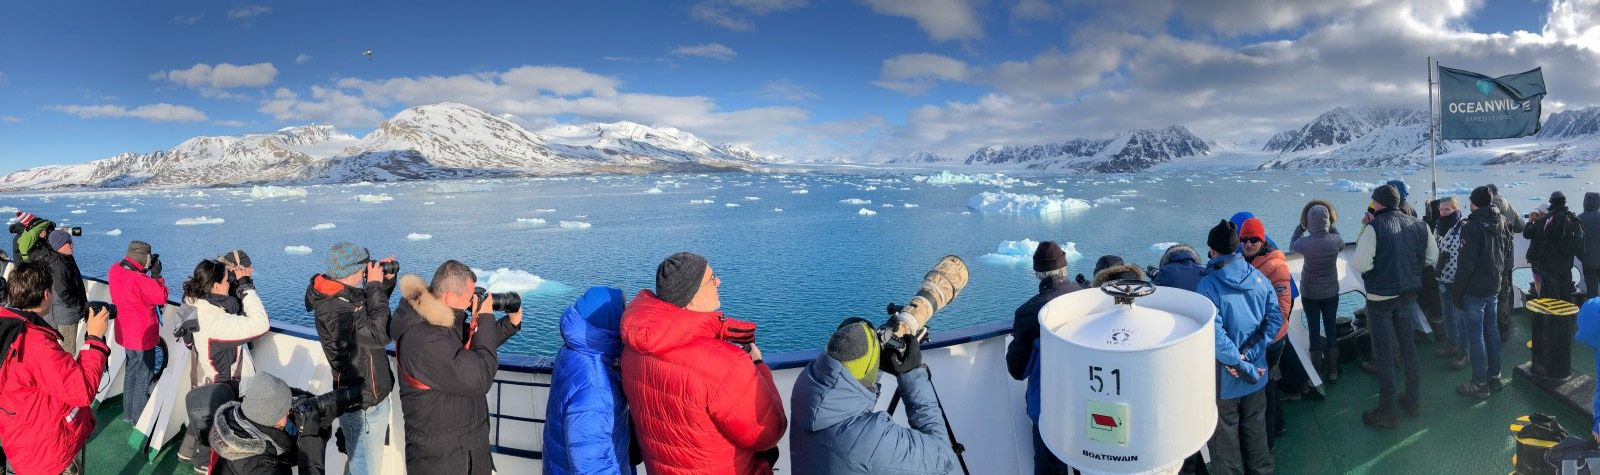 Ortelius, Monaco breen, Monaco glacier, Svalbard, June © Christophe Gouraud-Oceanwide Expeditions.jpg